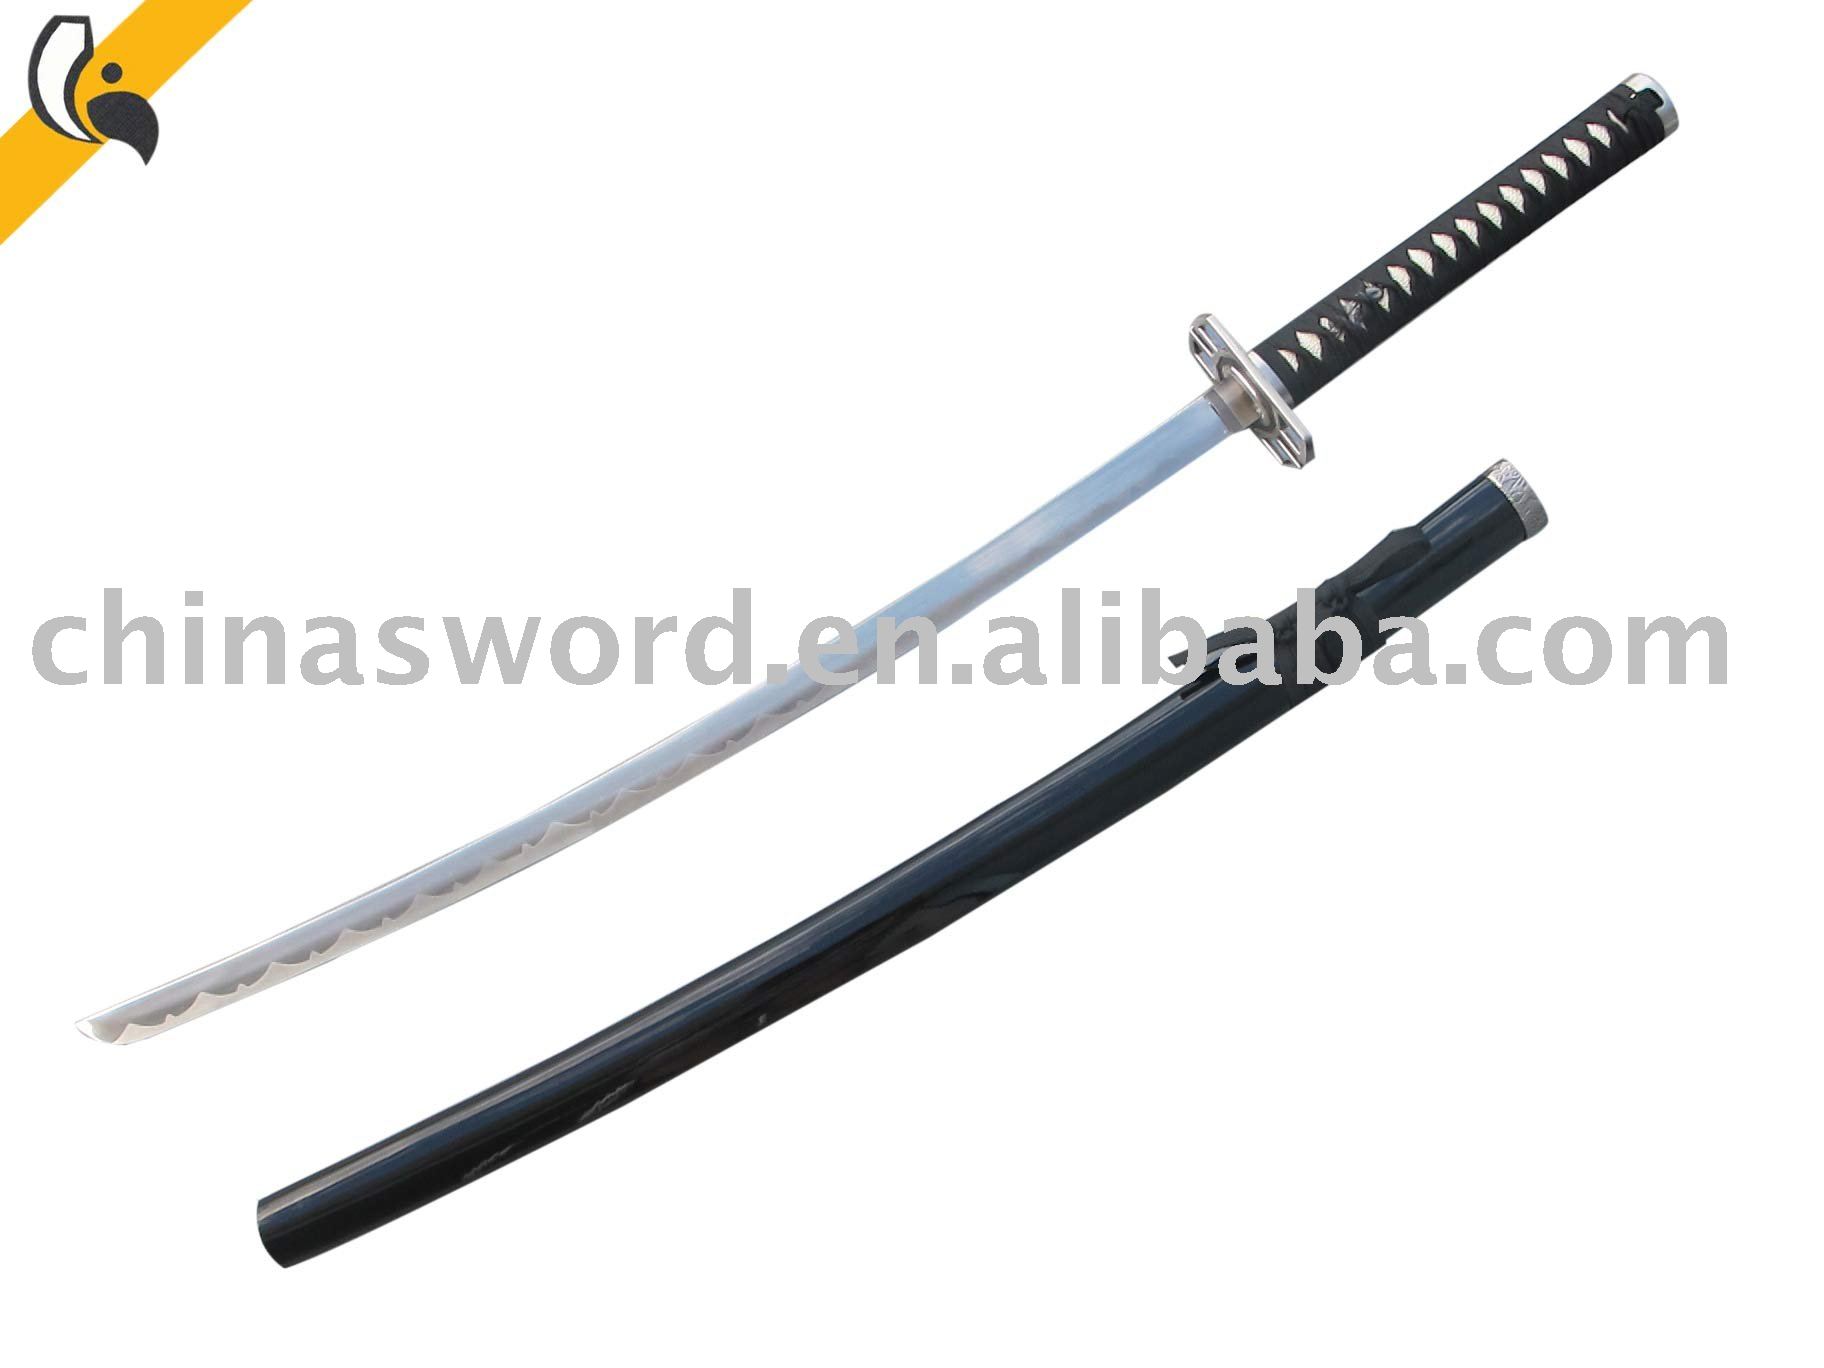 A Cartoon Sword